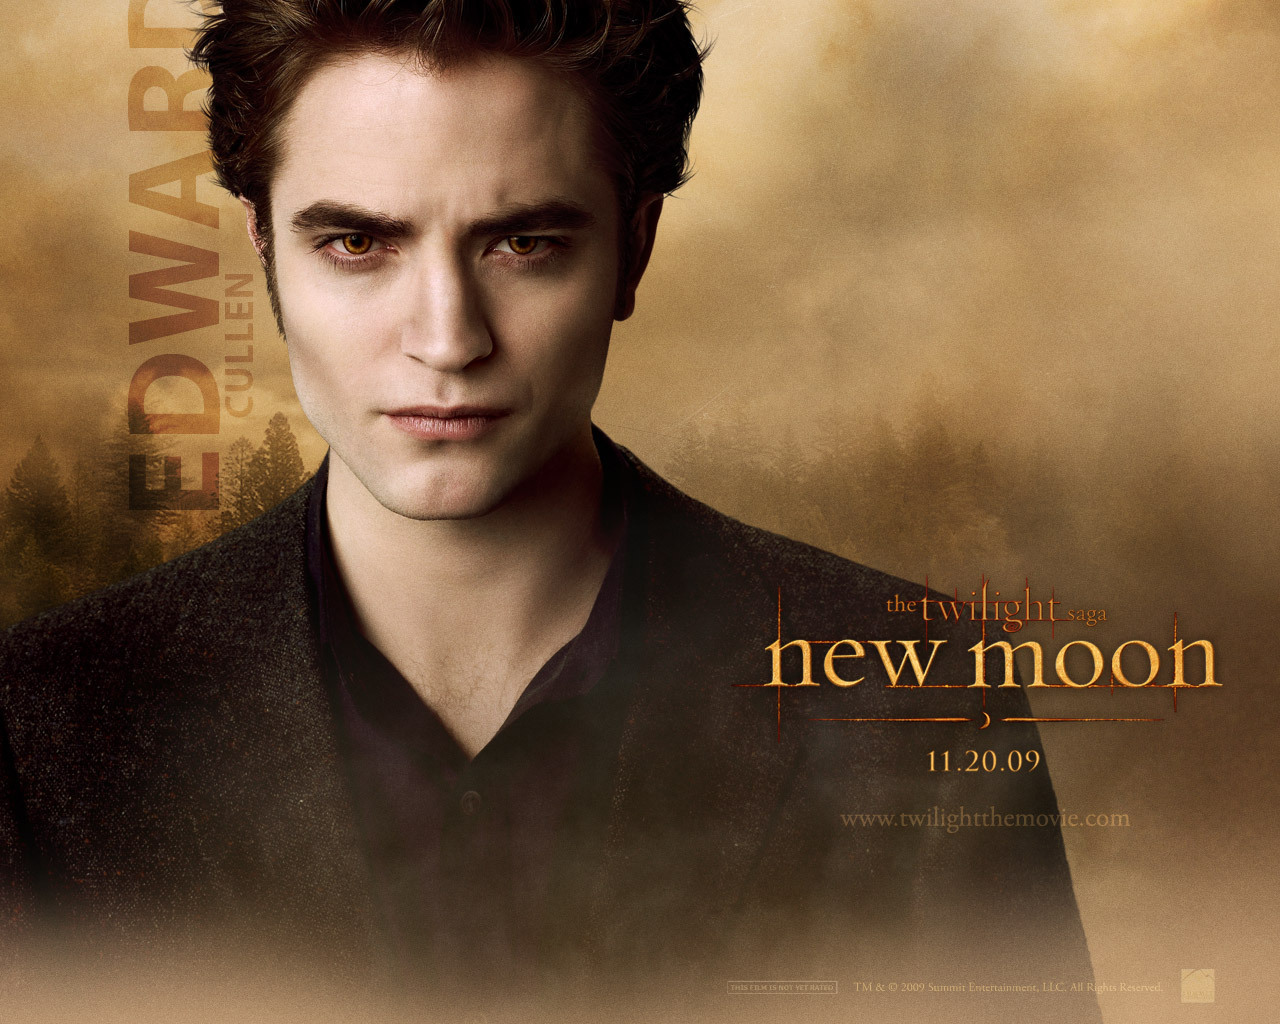 Twilight Wallpapers Download  Bella Swan Edward Cullen 1280x1024